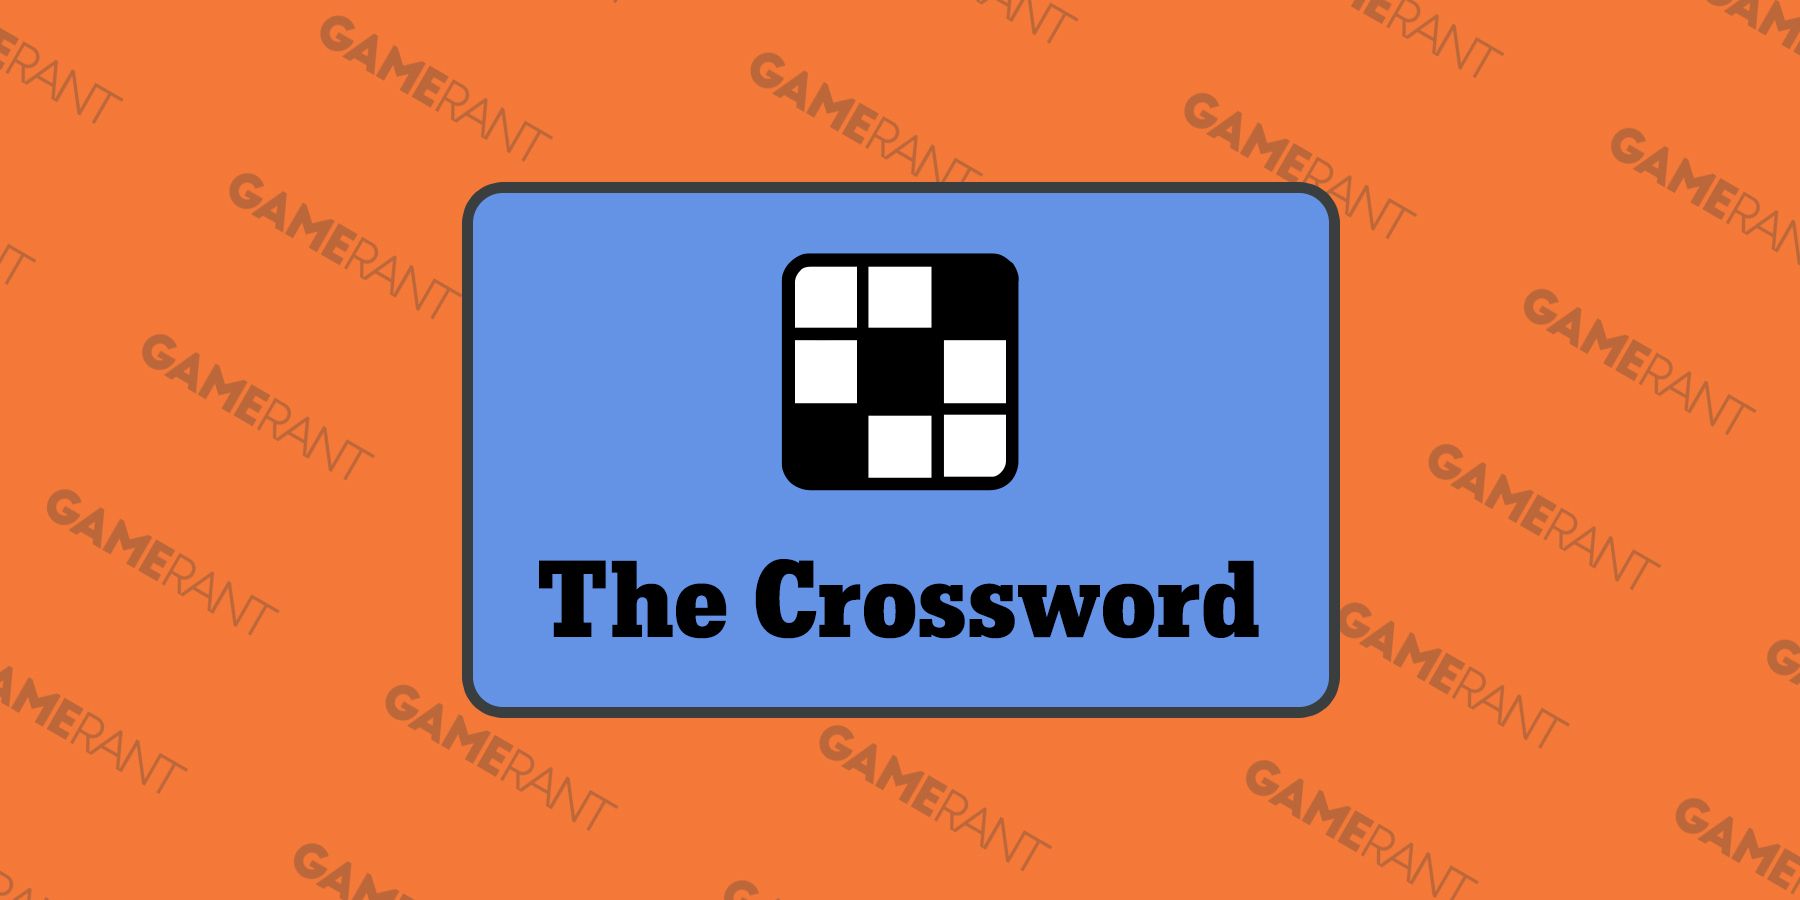 The New York Times Crossword logo on an orange background